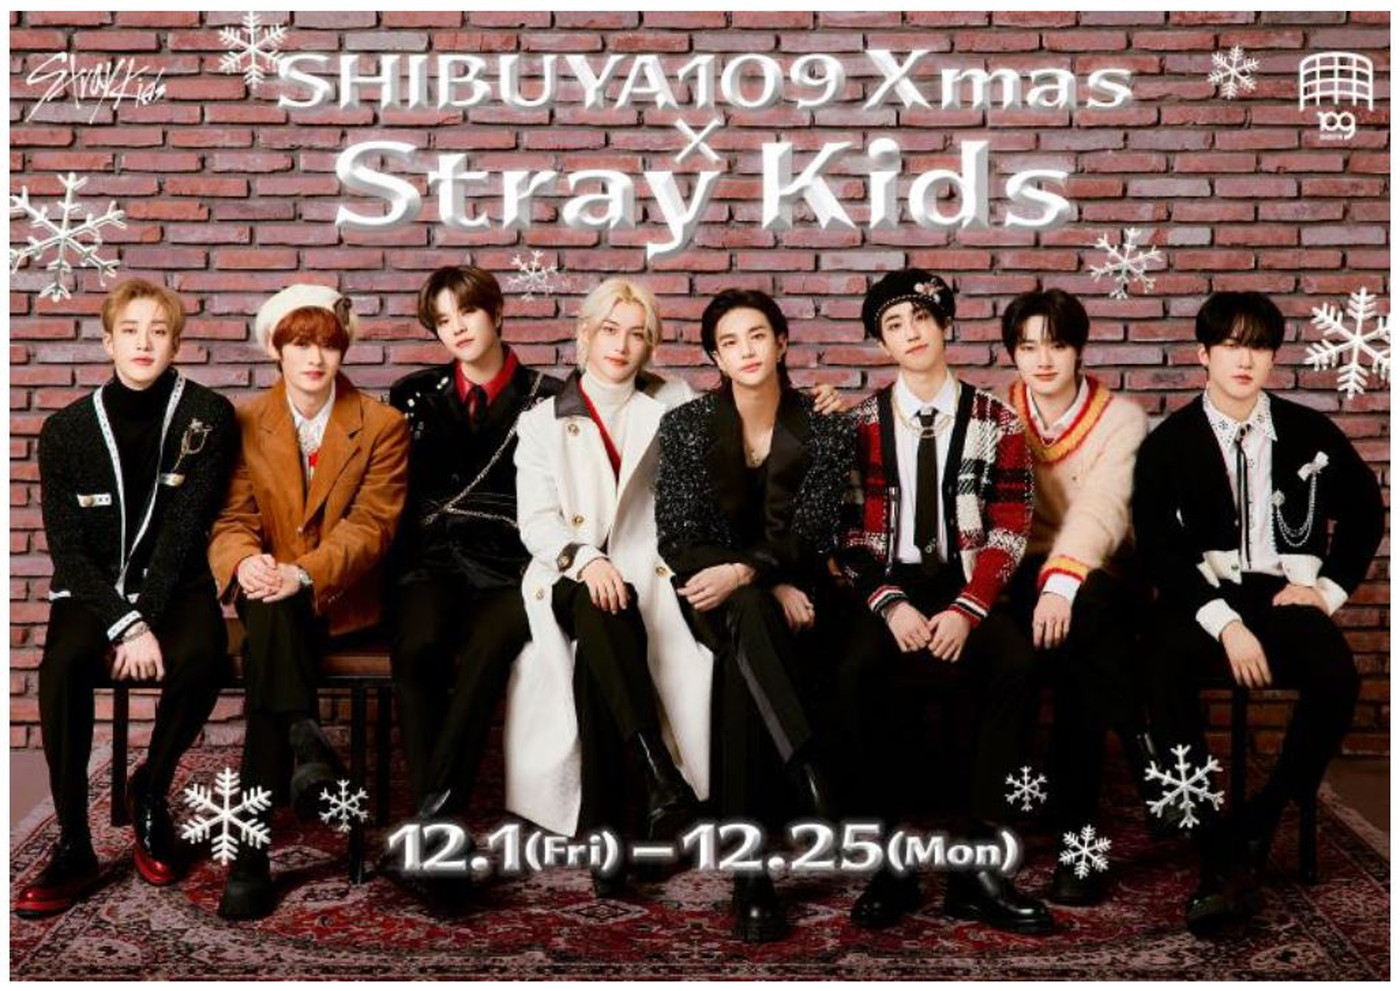 Stray Kids（ストレイキッズ）がSHIBUYA109をジャック！ 豪華コラボによるクリスマスキャンペーン開催決定